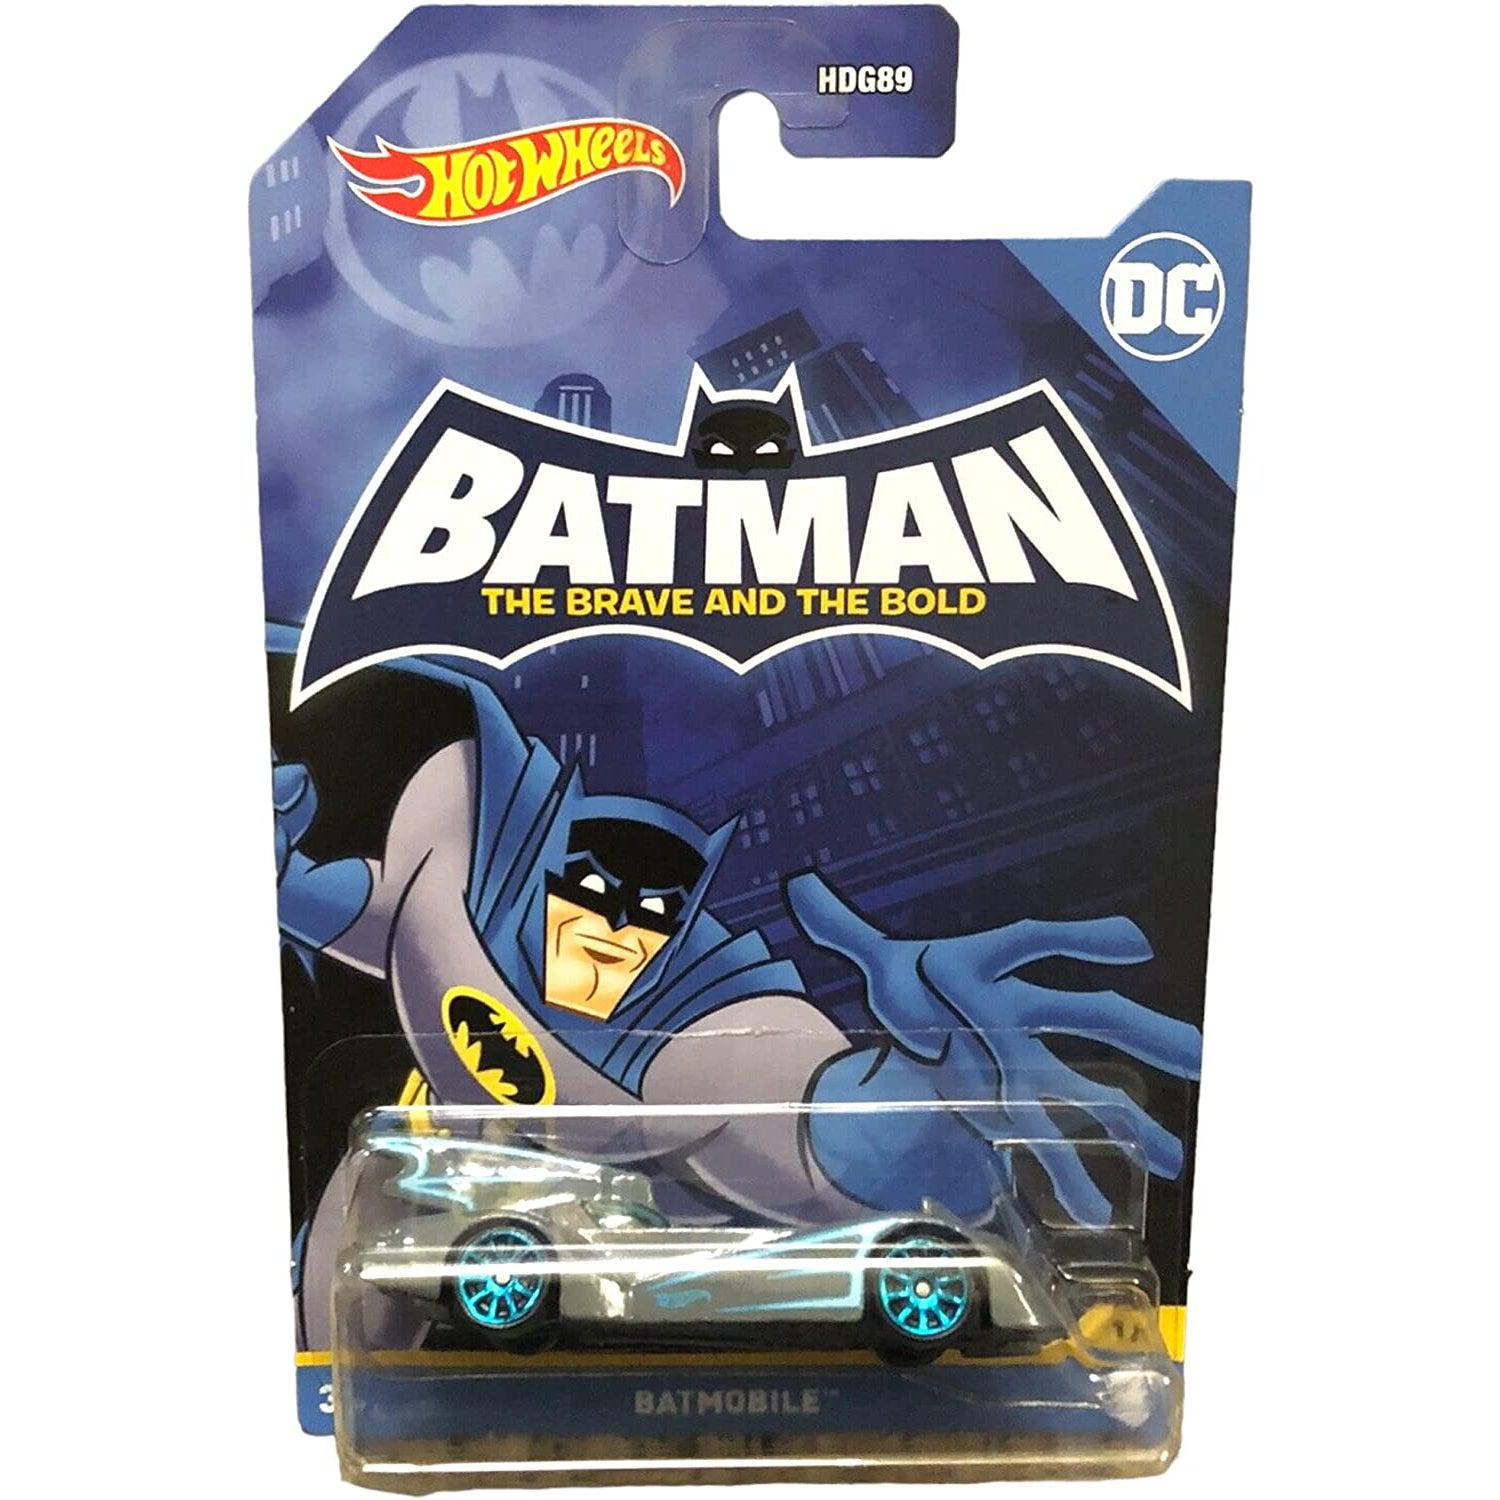 Mattel-Hot Wheels: Batman Themed Cars-HDK78-Batmobile-Legacy Toys